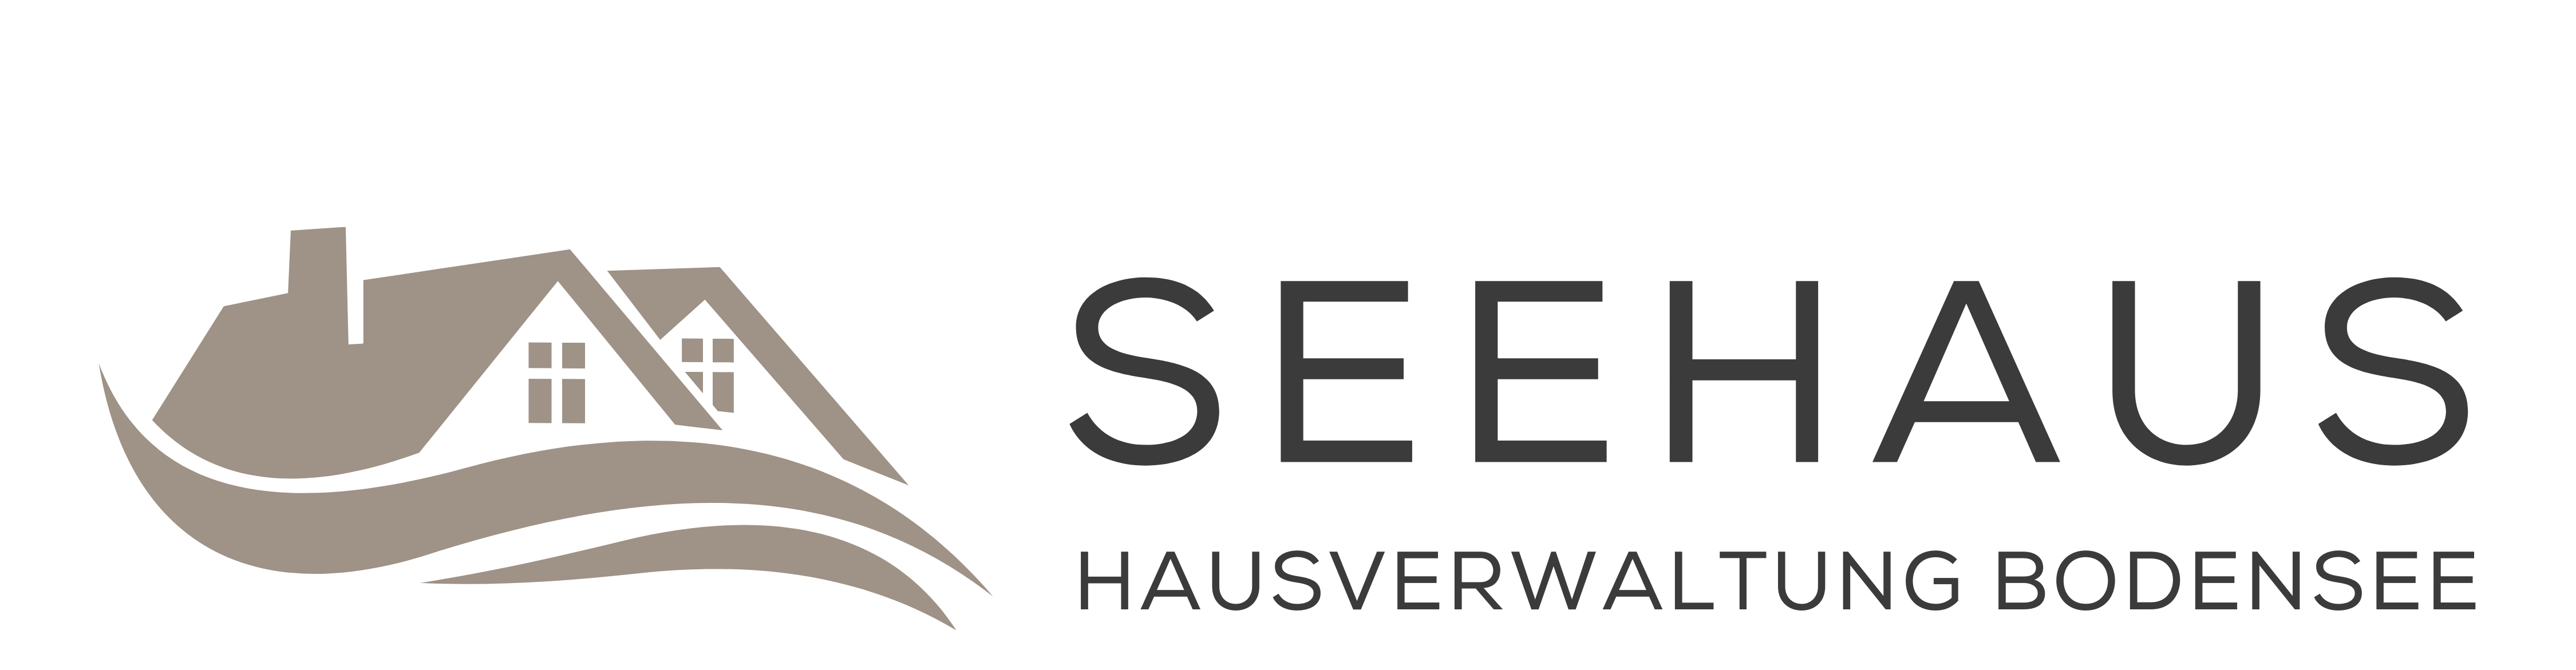 Seehaus Hausverwaltung Bodensee